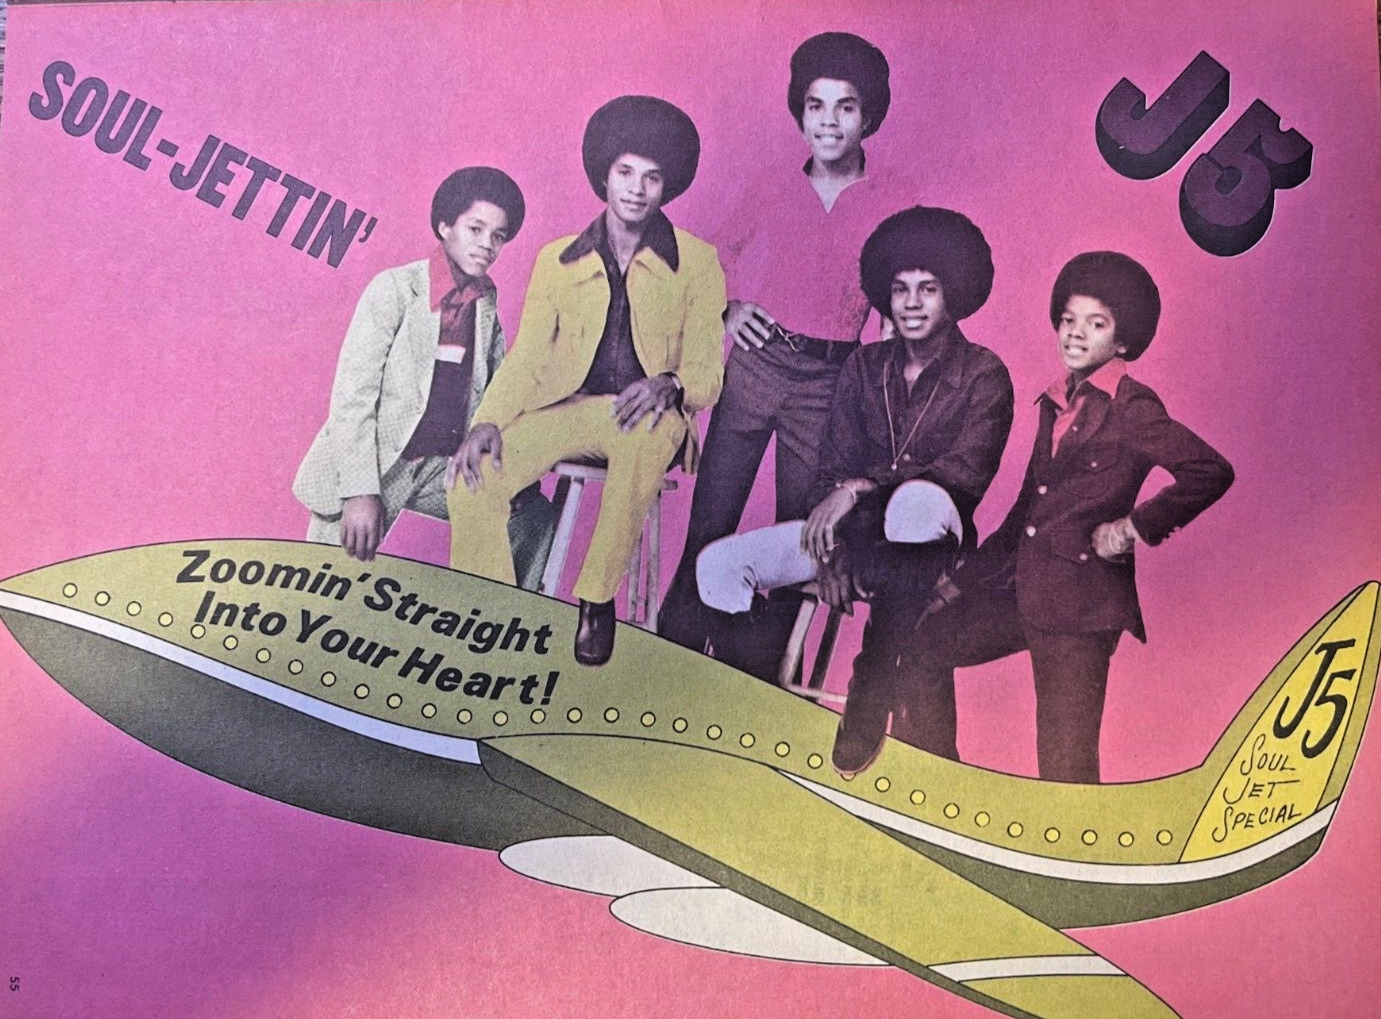 1972 Vintage Illustration J-5 Soul-Jettin